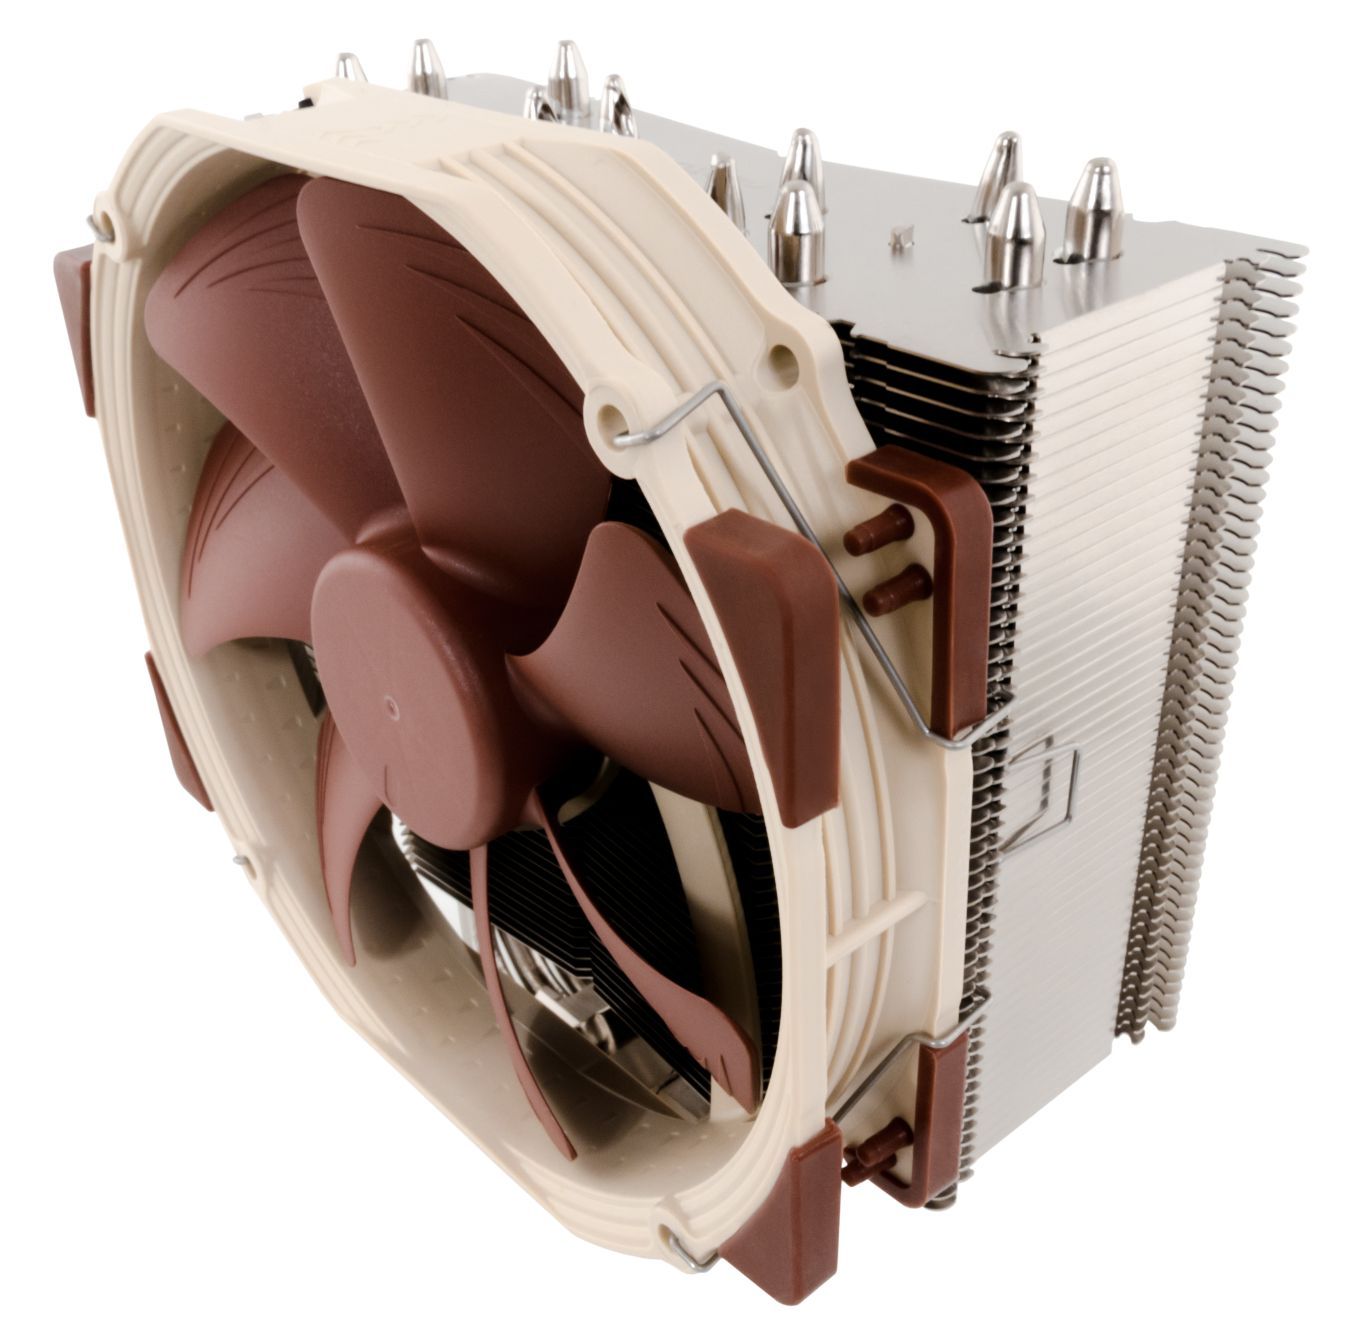 Noctua NH-U14S Slim Design for Full RAM Compatibility on LGA2011 CPU Cooler